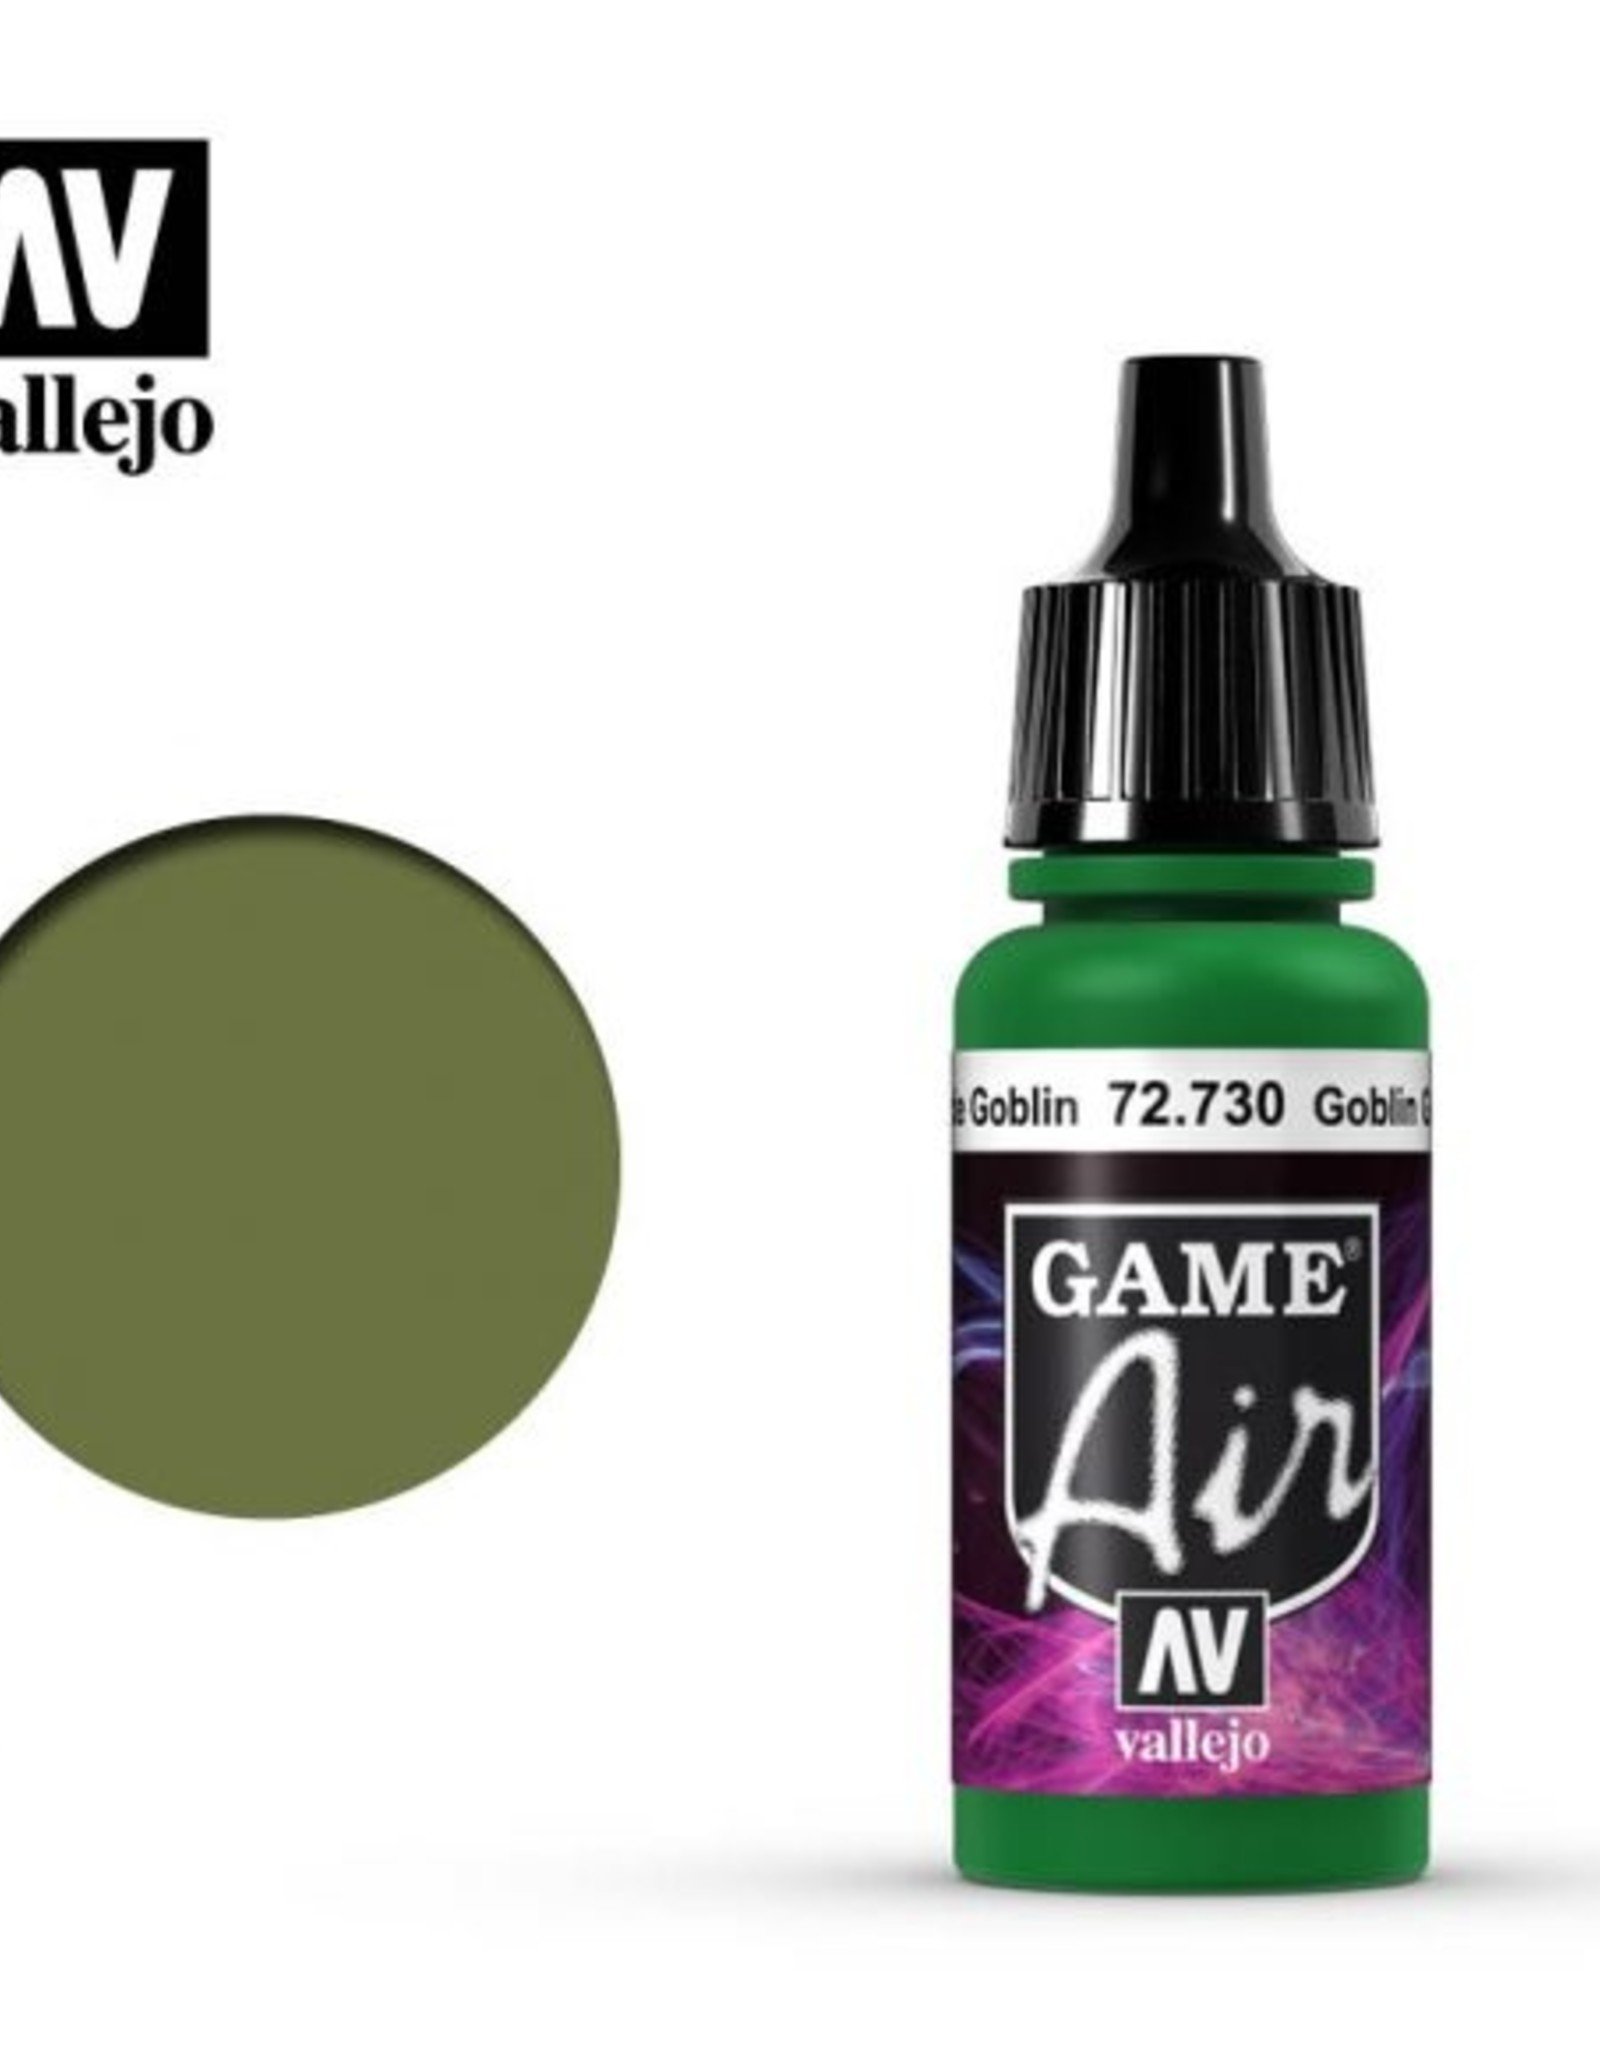 Vallejo Game Air:  72.730 Goblin Green